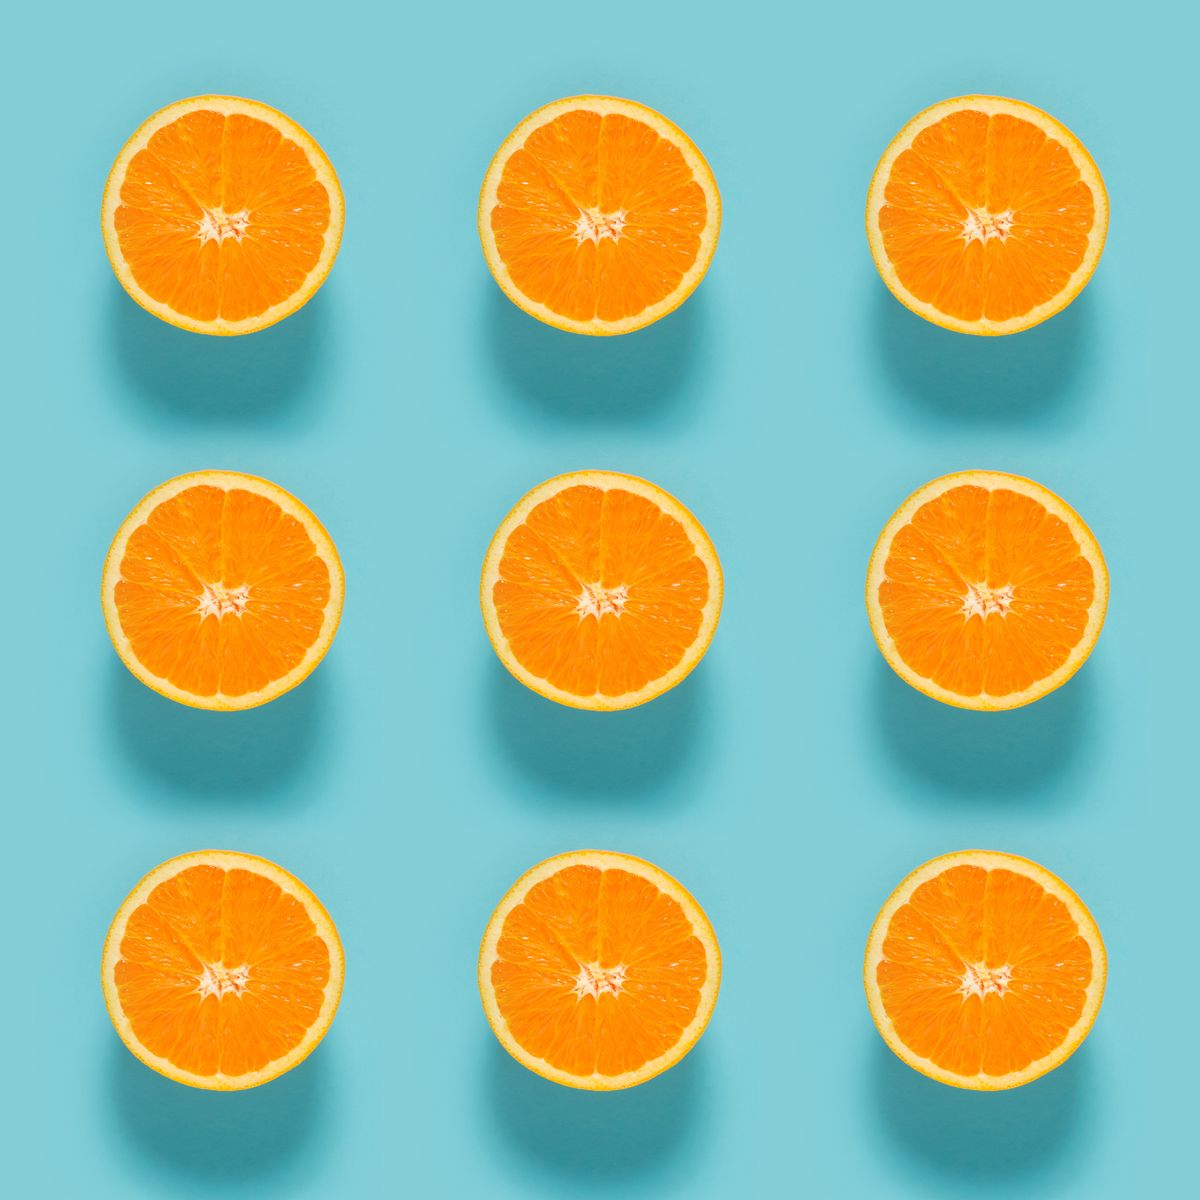 close up of sliced orange fruits on blue background